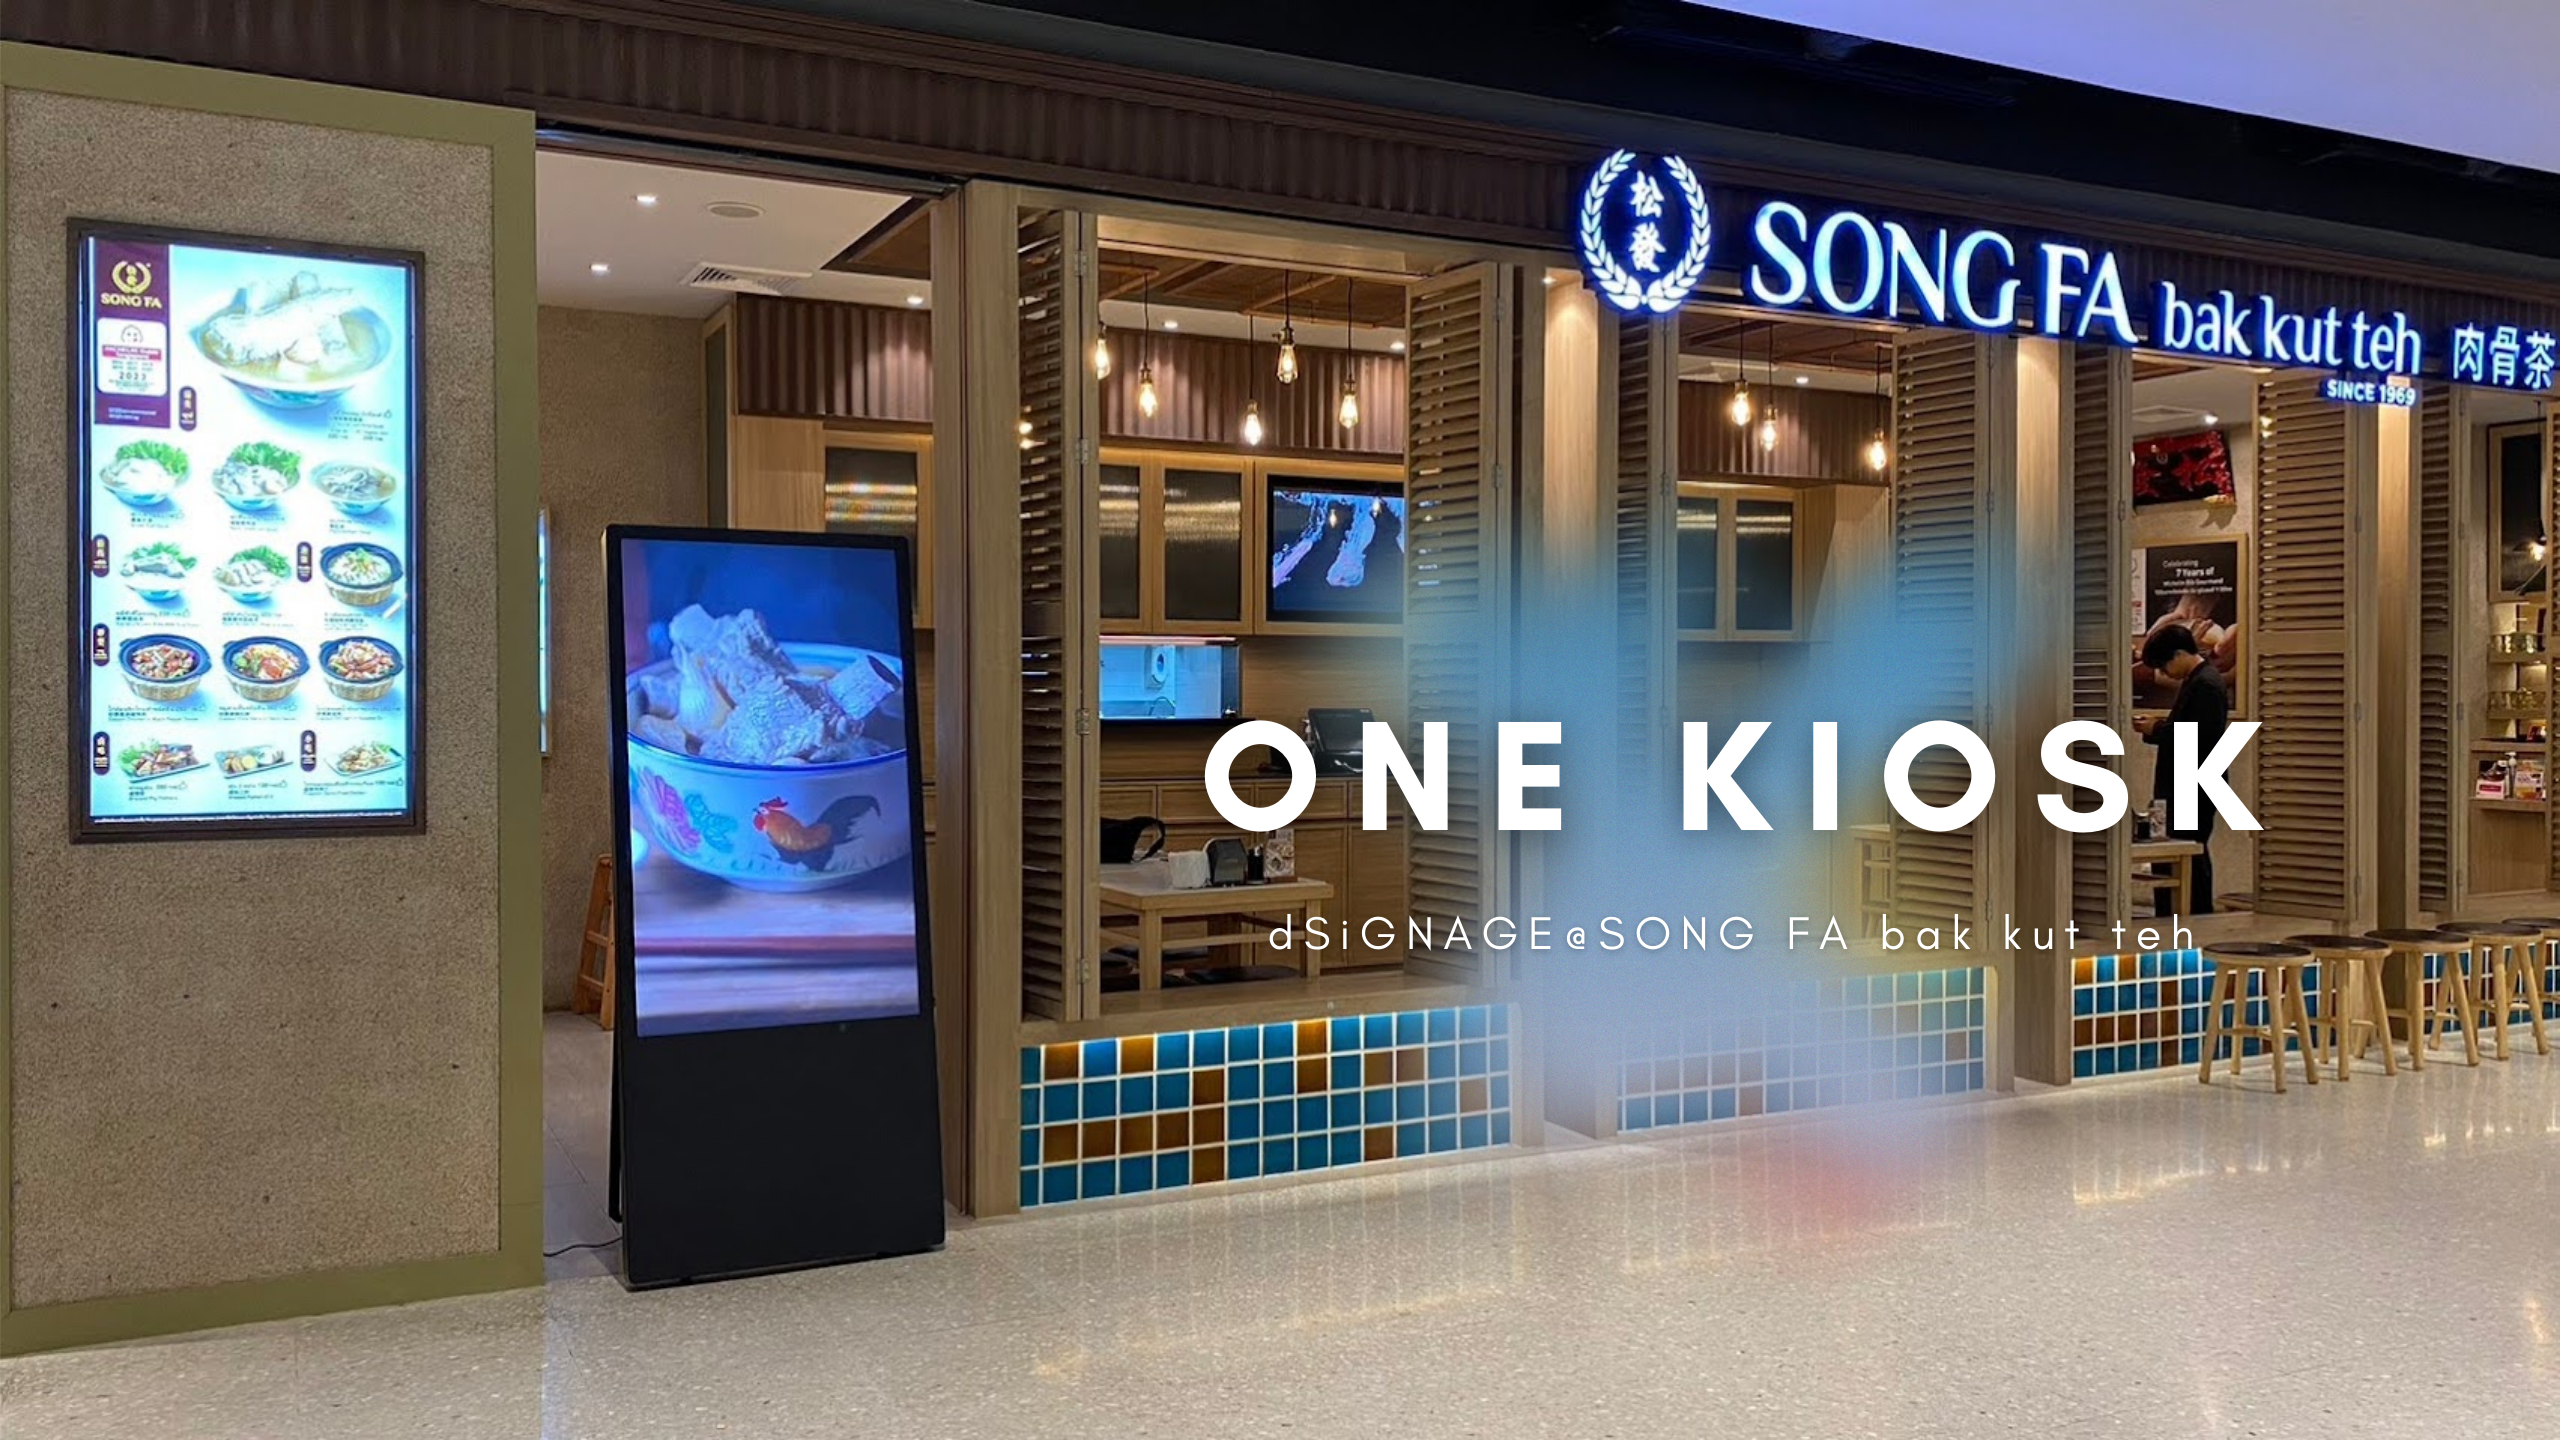 Song Fa Bak Kut Teh กับจอโฆษณาที่ใช้งานง่ายในสไตล์ One Kiosk